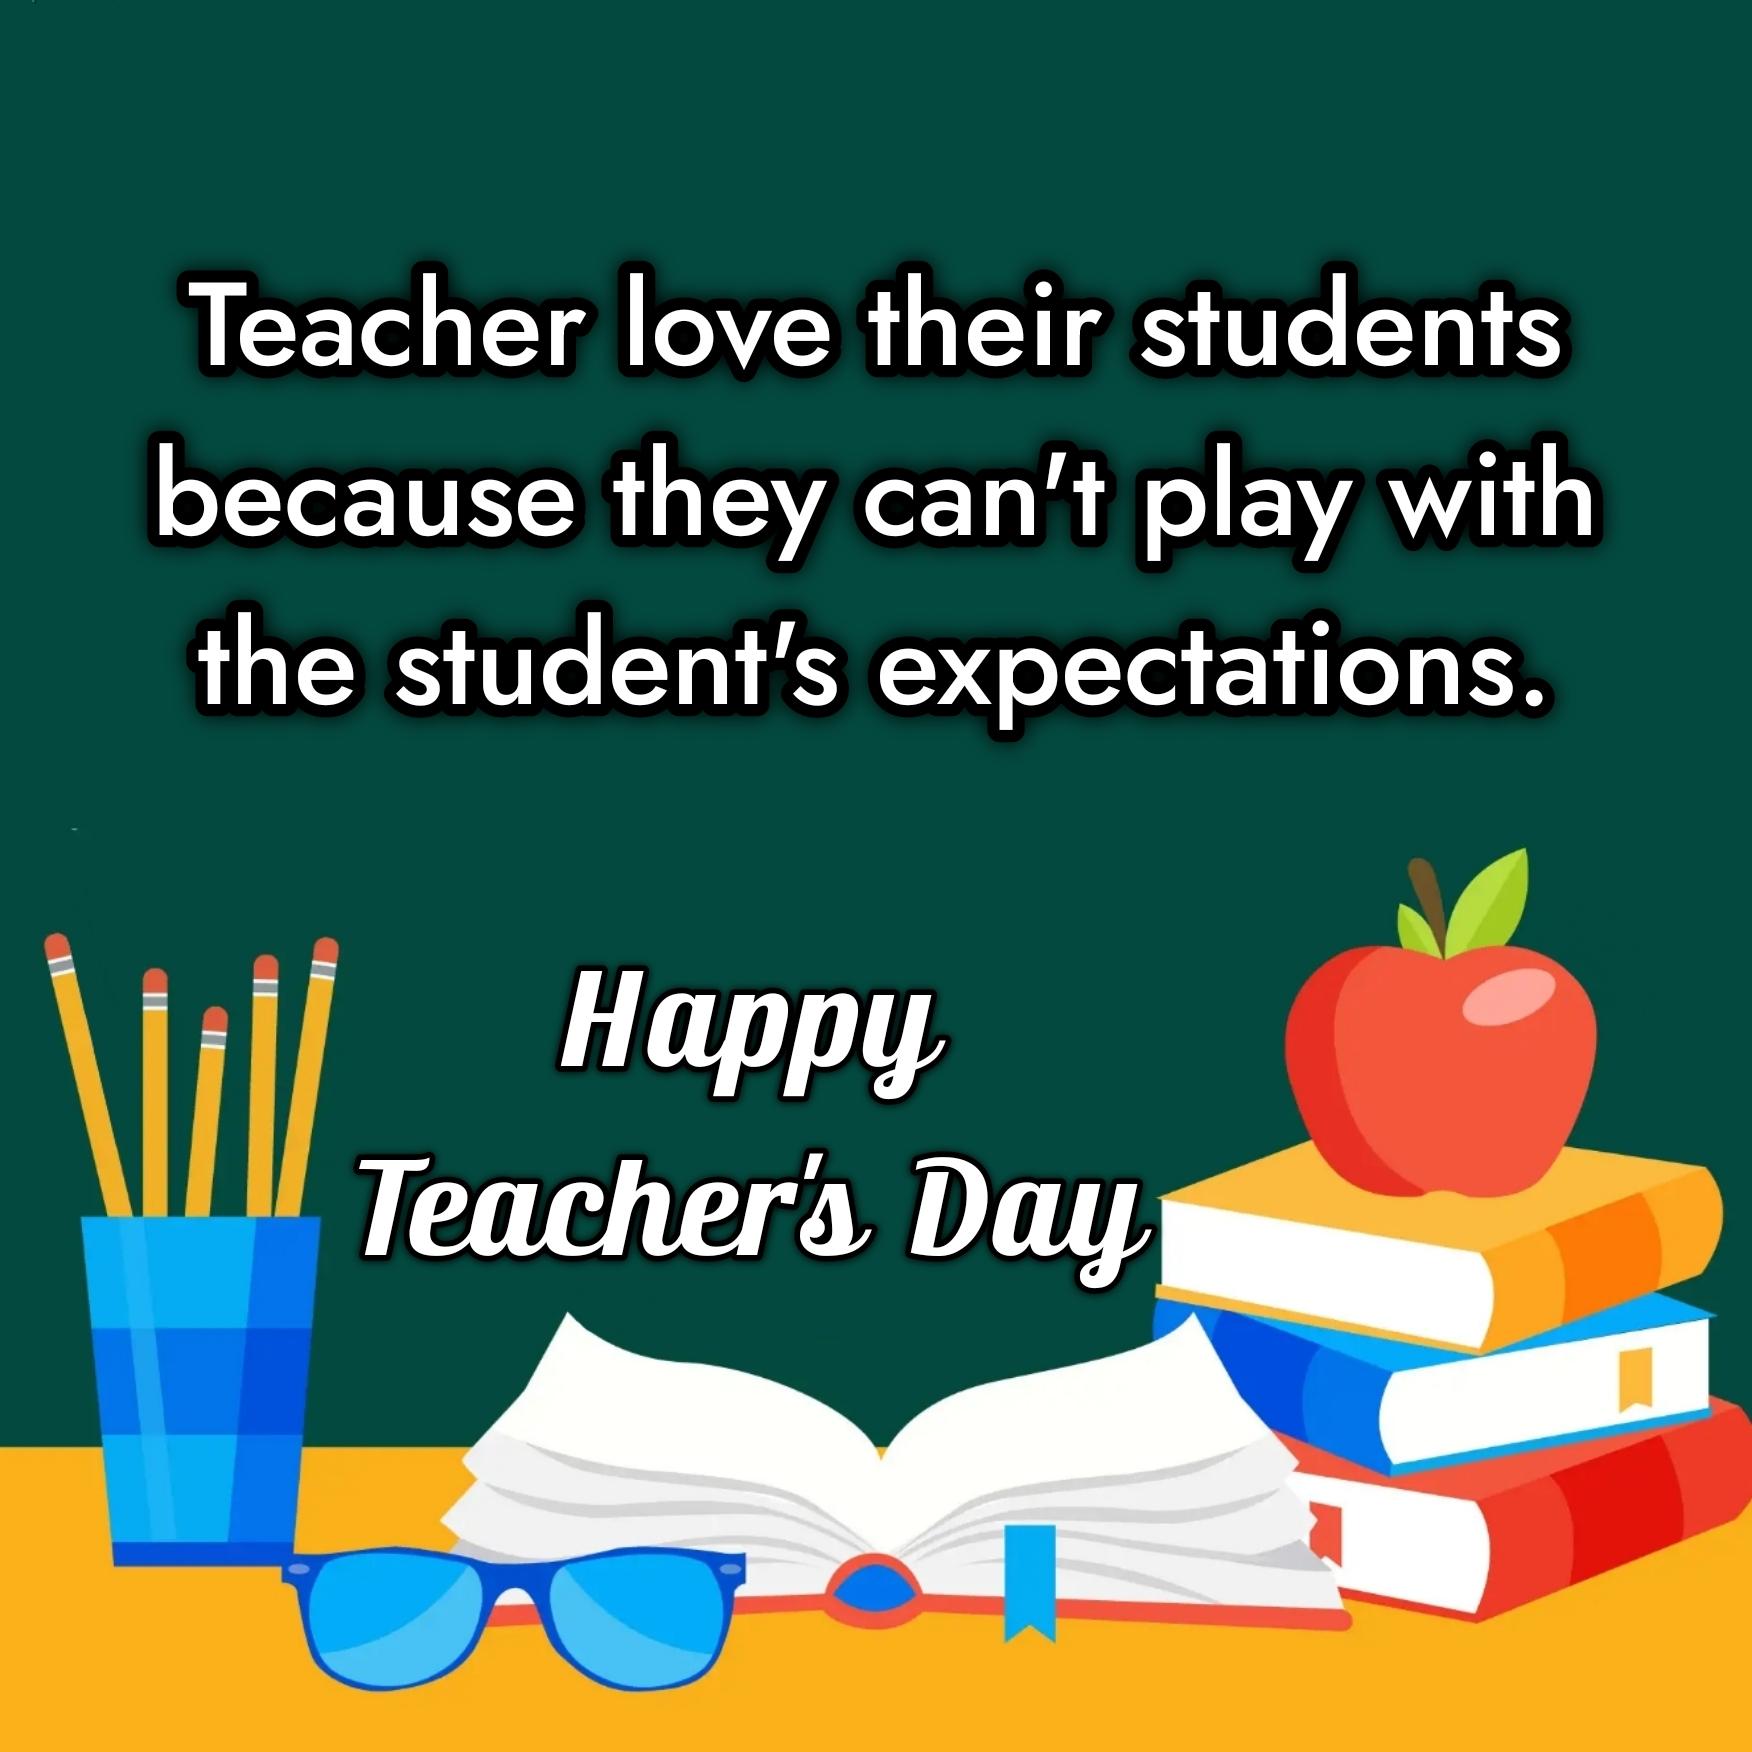 Teacher love their students because